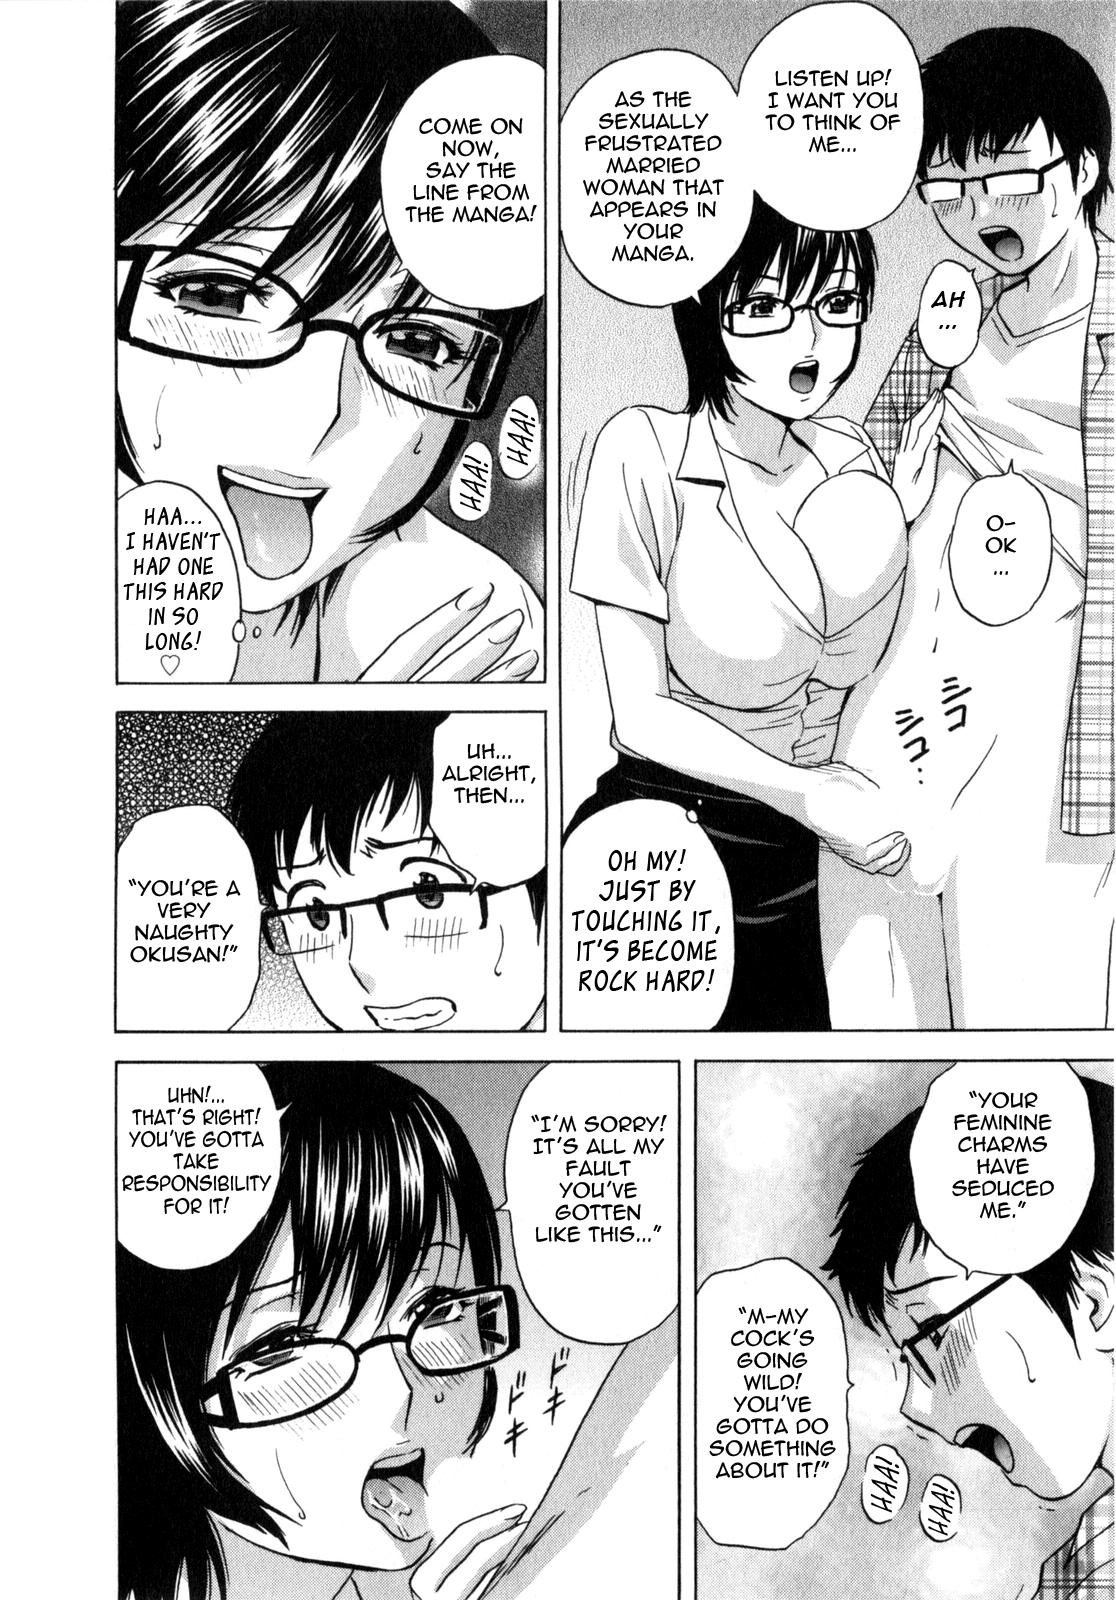 Life with Married Women Just Like a Manga 1 106